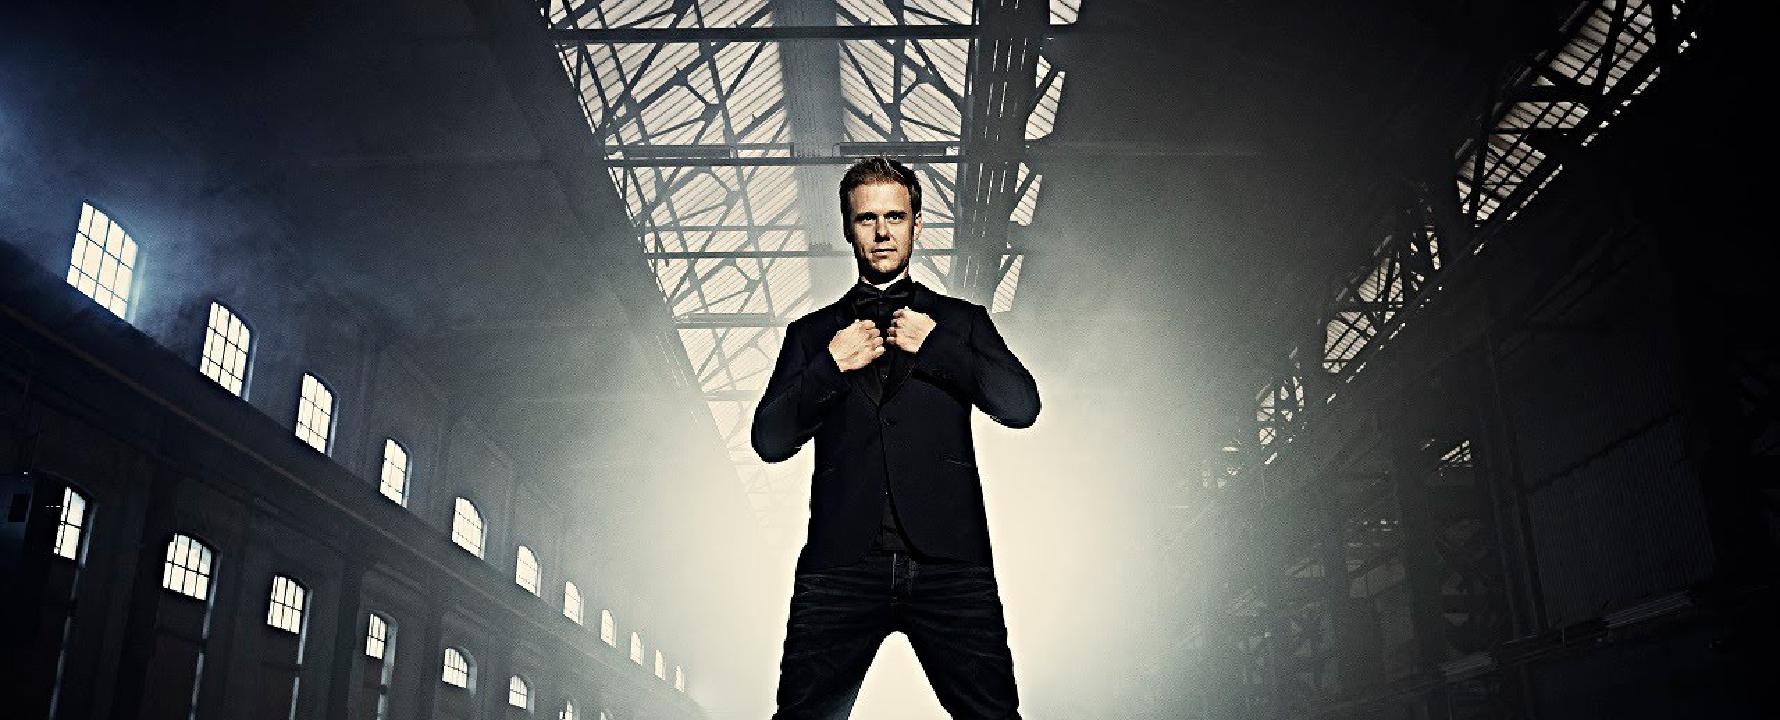 Fotografía promocional de Armin van Buuren